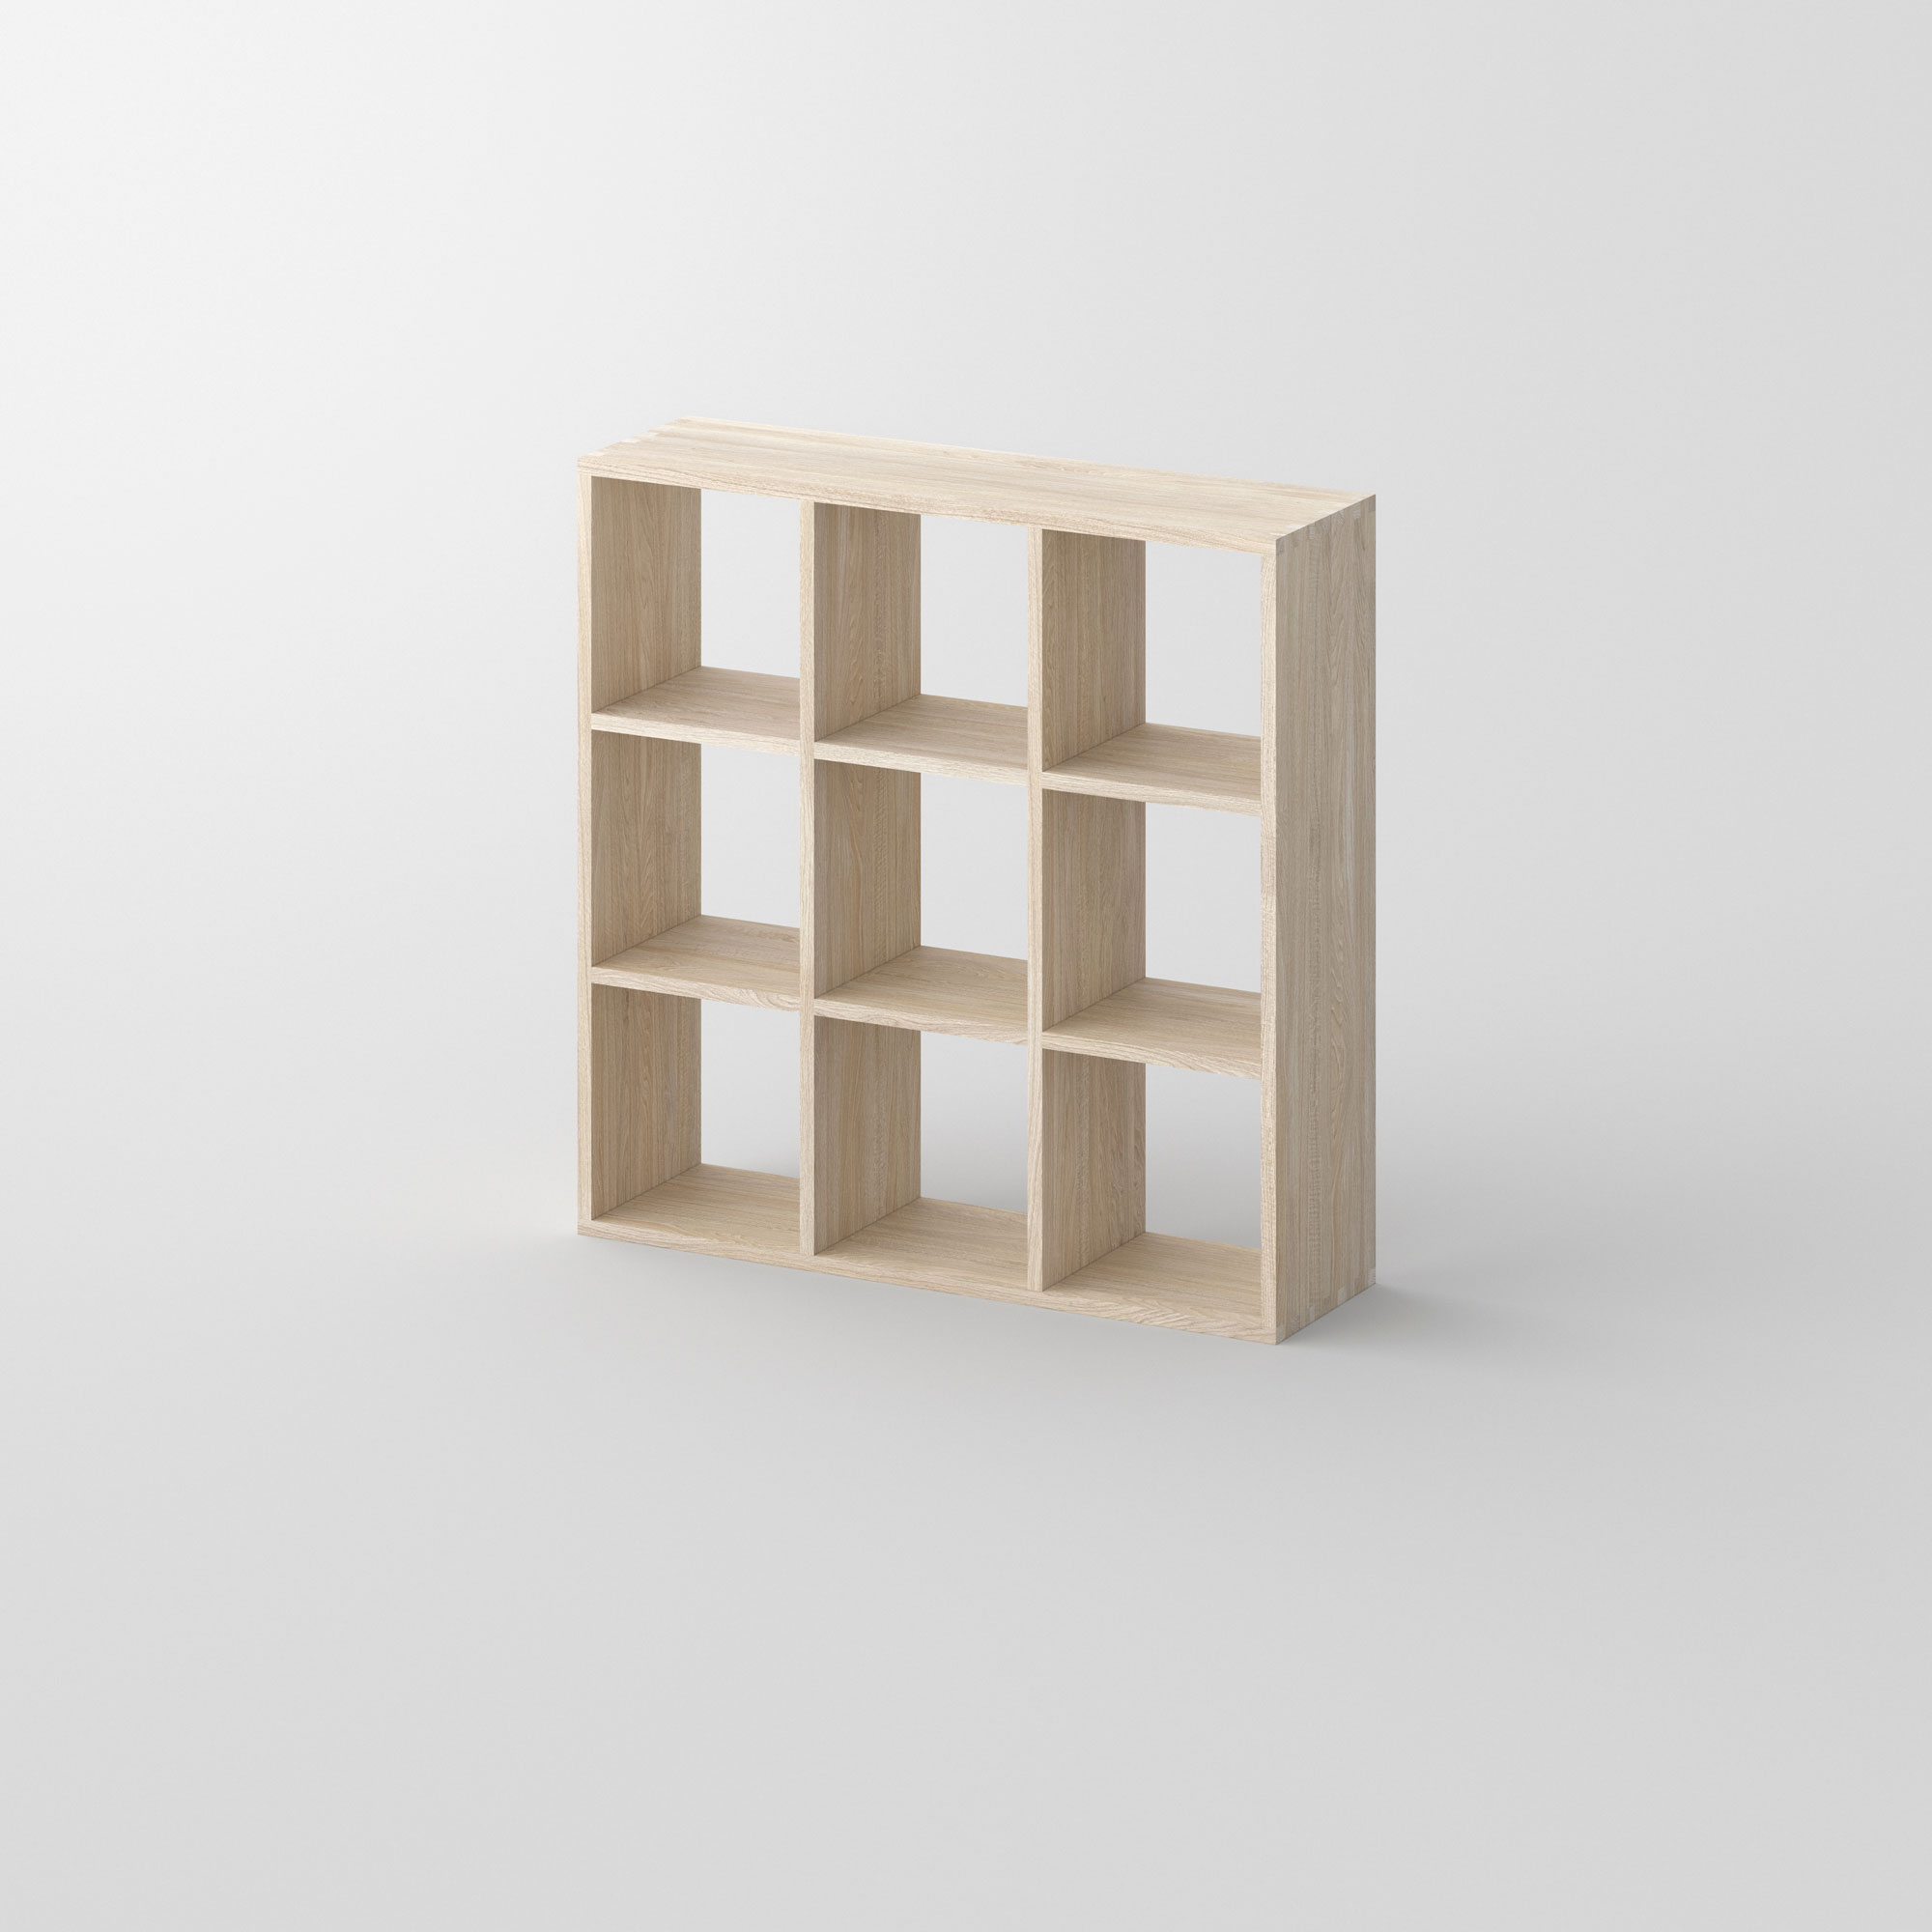 Designer Wood Shelf PISA G cam1 custom made in solid wood by vitamin design